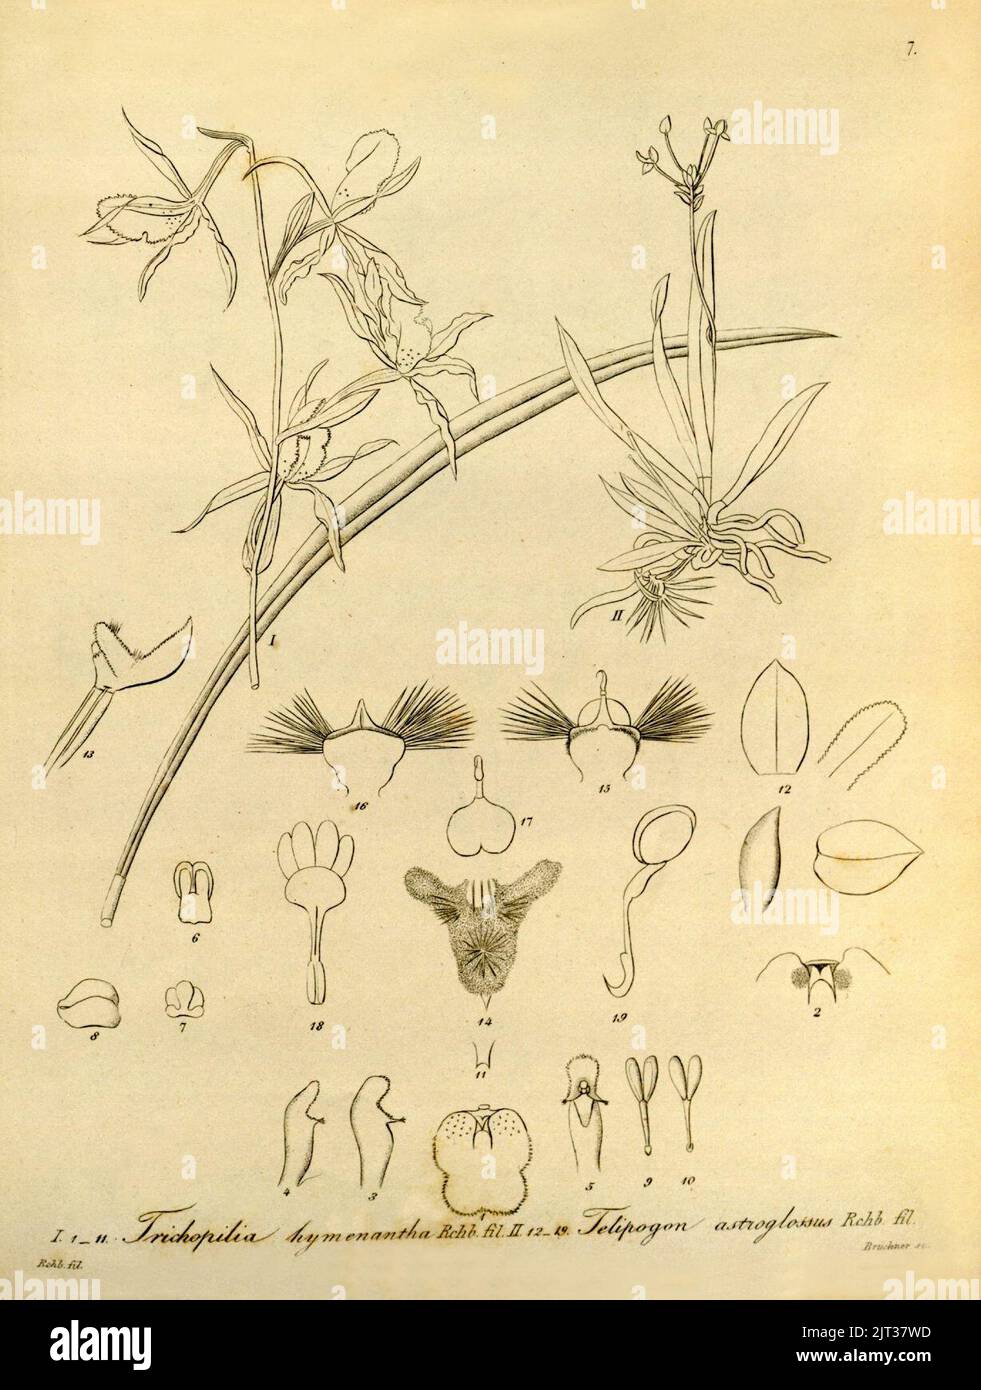 Trichopilia subulata (as Trichopilia hymenantha) and Telipogon astroglossus - Xenia vol 1 pl 7 (1858). Stock Photo